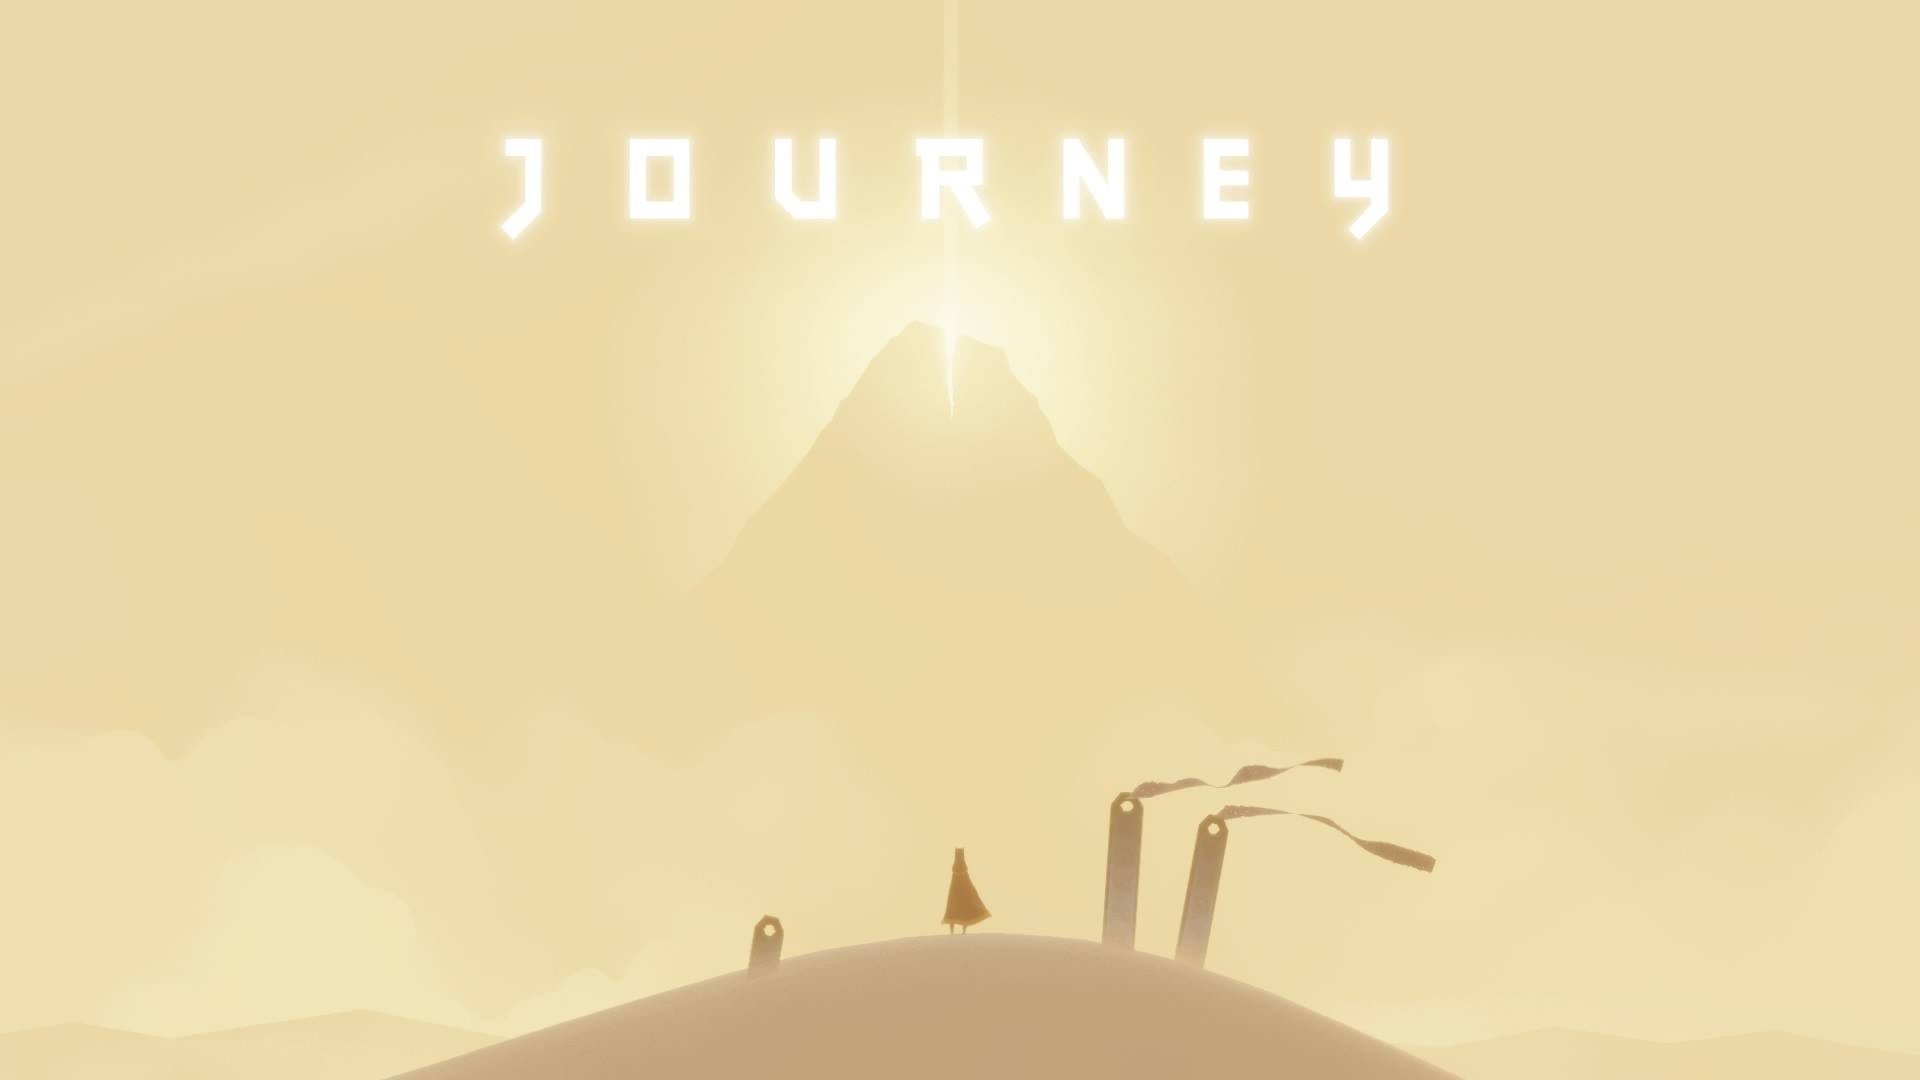 video games, Screen shot, Journey (game) Wallpaper